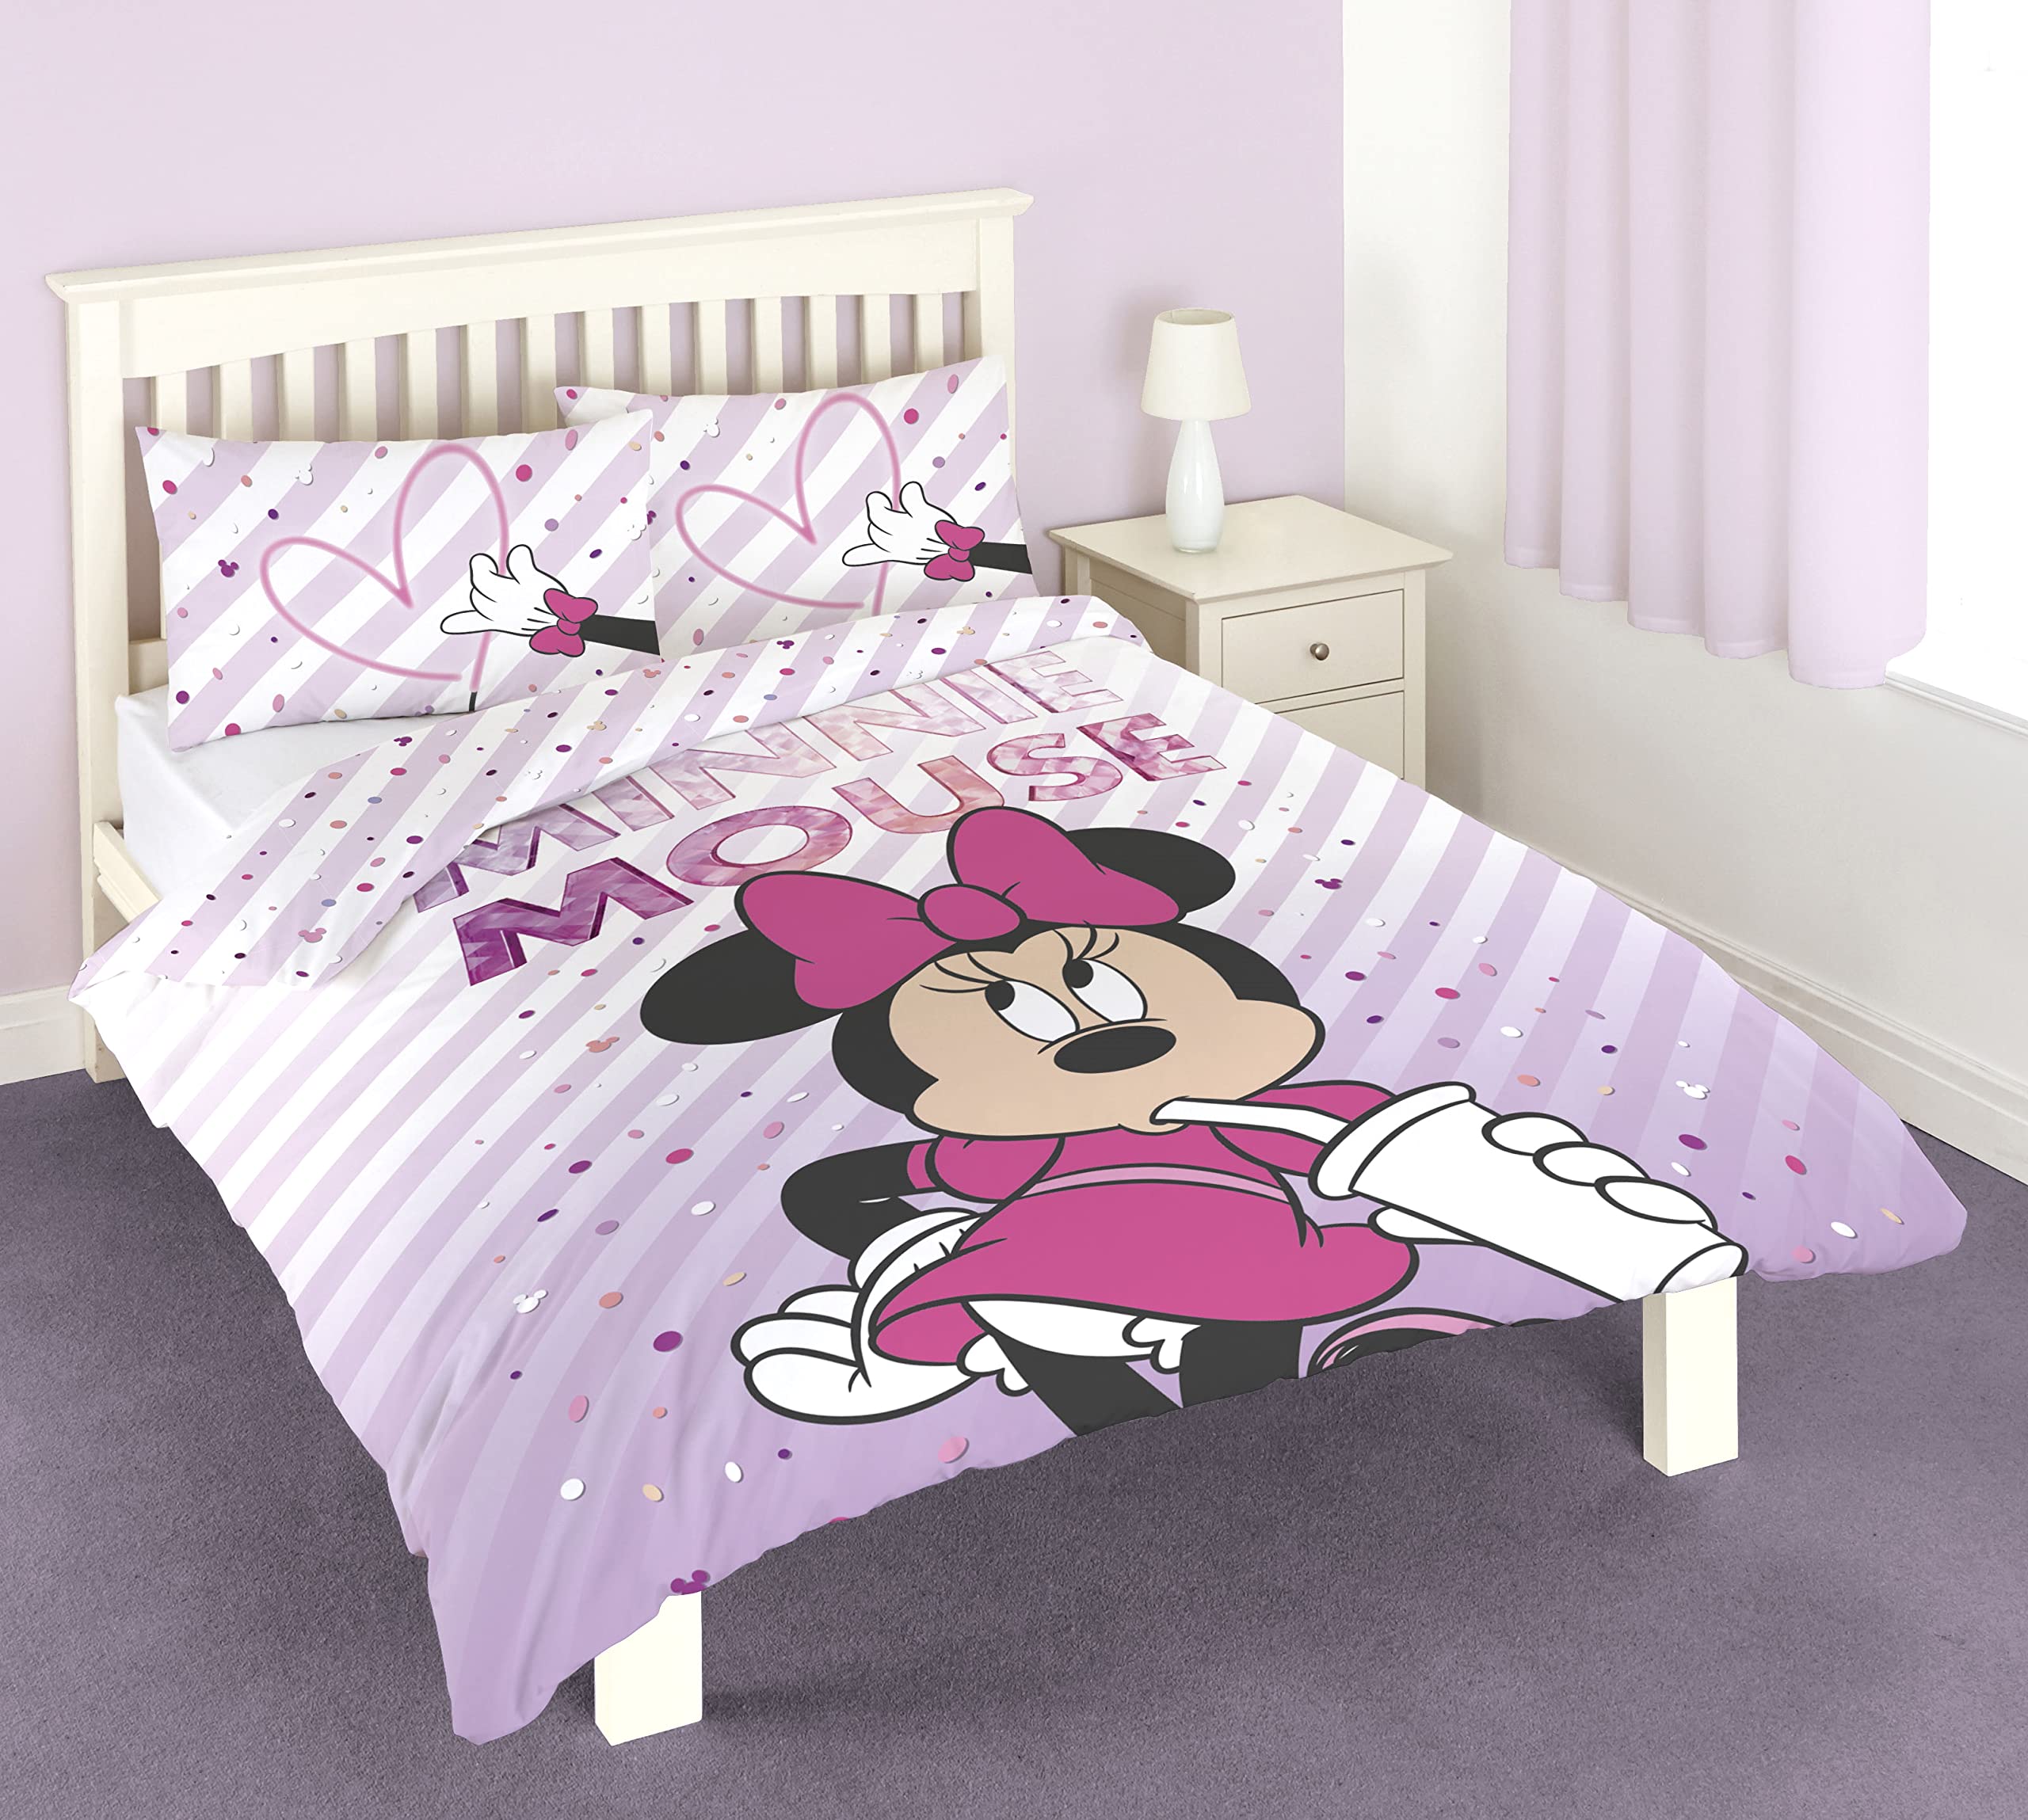 Disney Minnie Mouse Official Double Duvet Cover Set, Pink